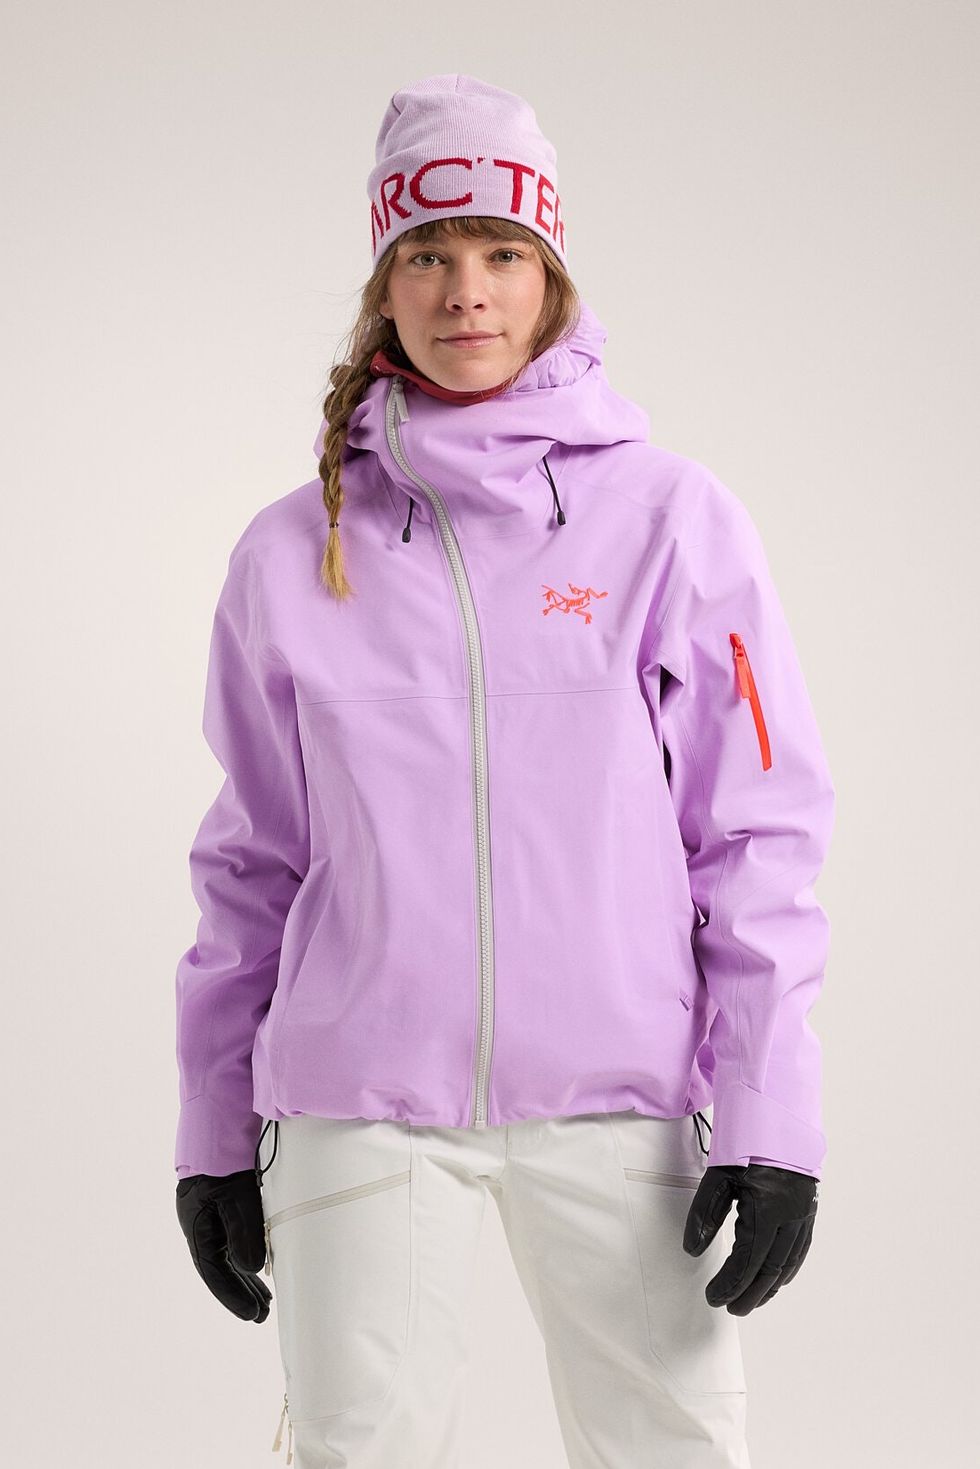 The Best Ski Jackets for Women: Staff Picks